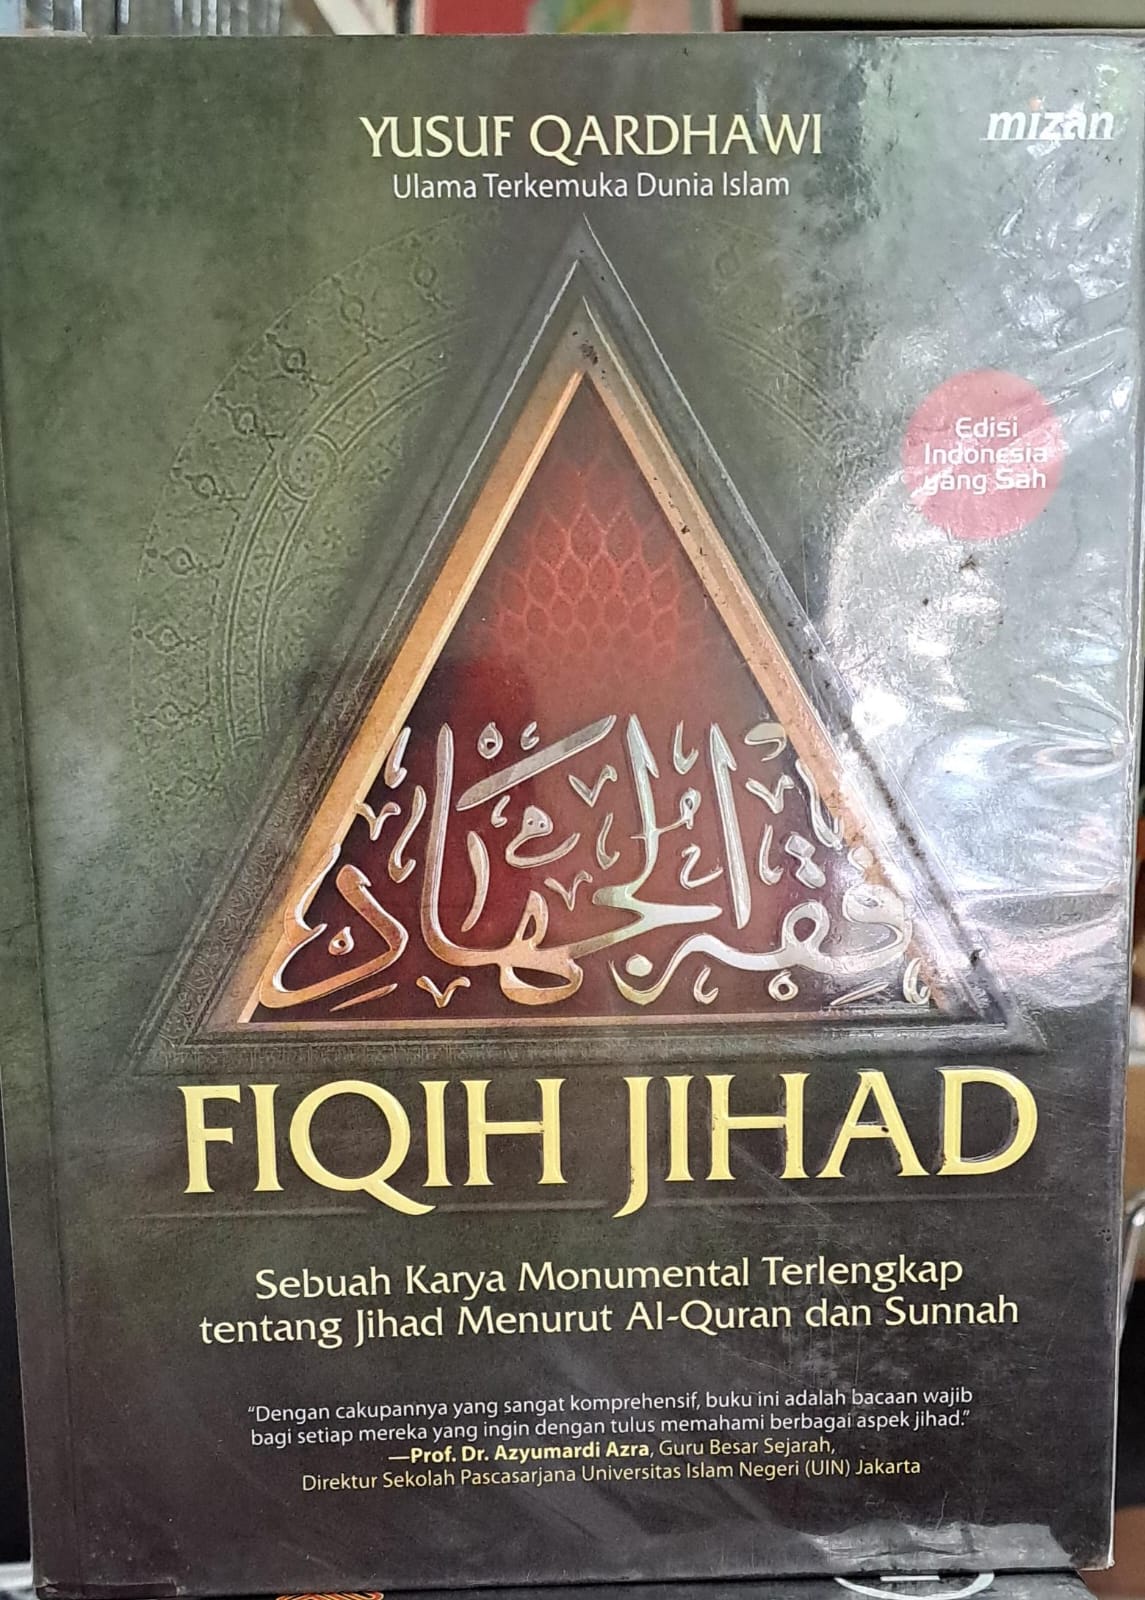 Fiqih Jihad :  Sebuah karya monumental terlengkap tentang jihad menurut al-qur'an dan sunnah